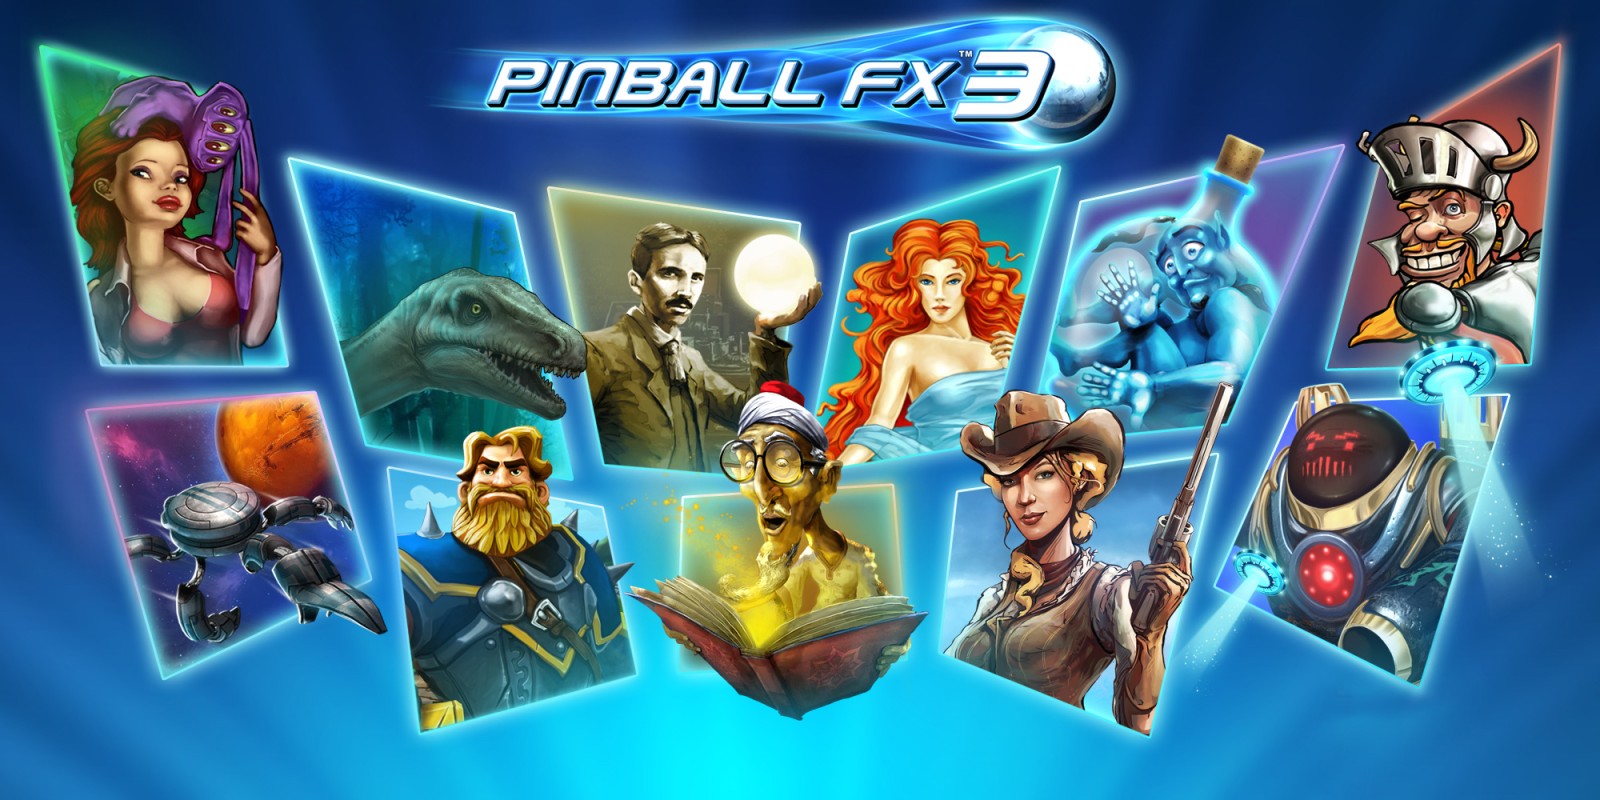 fx3 pinball download